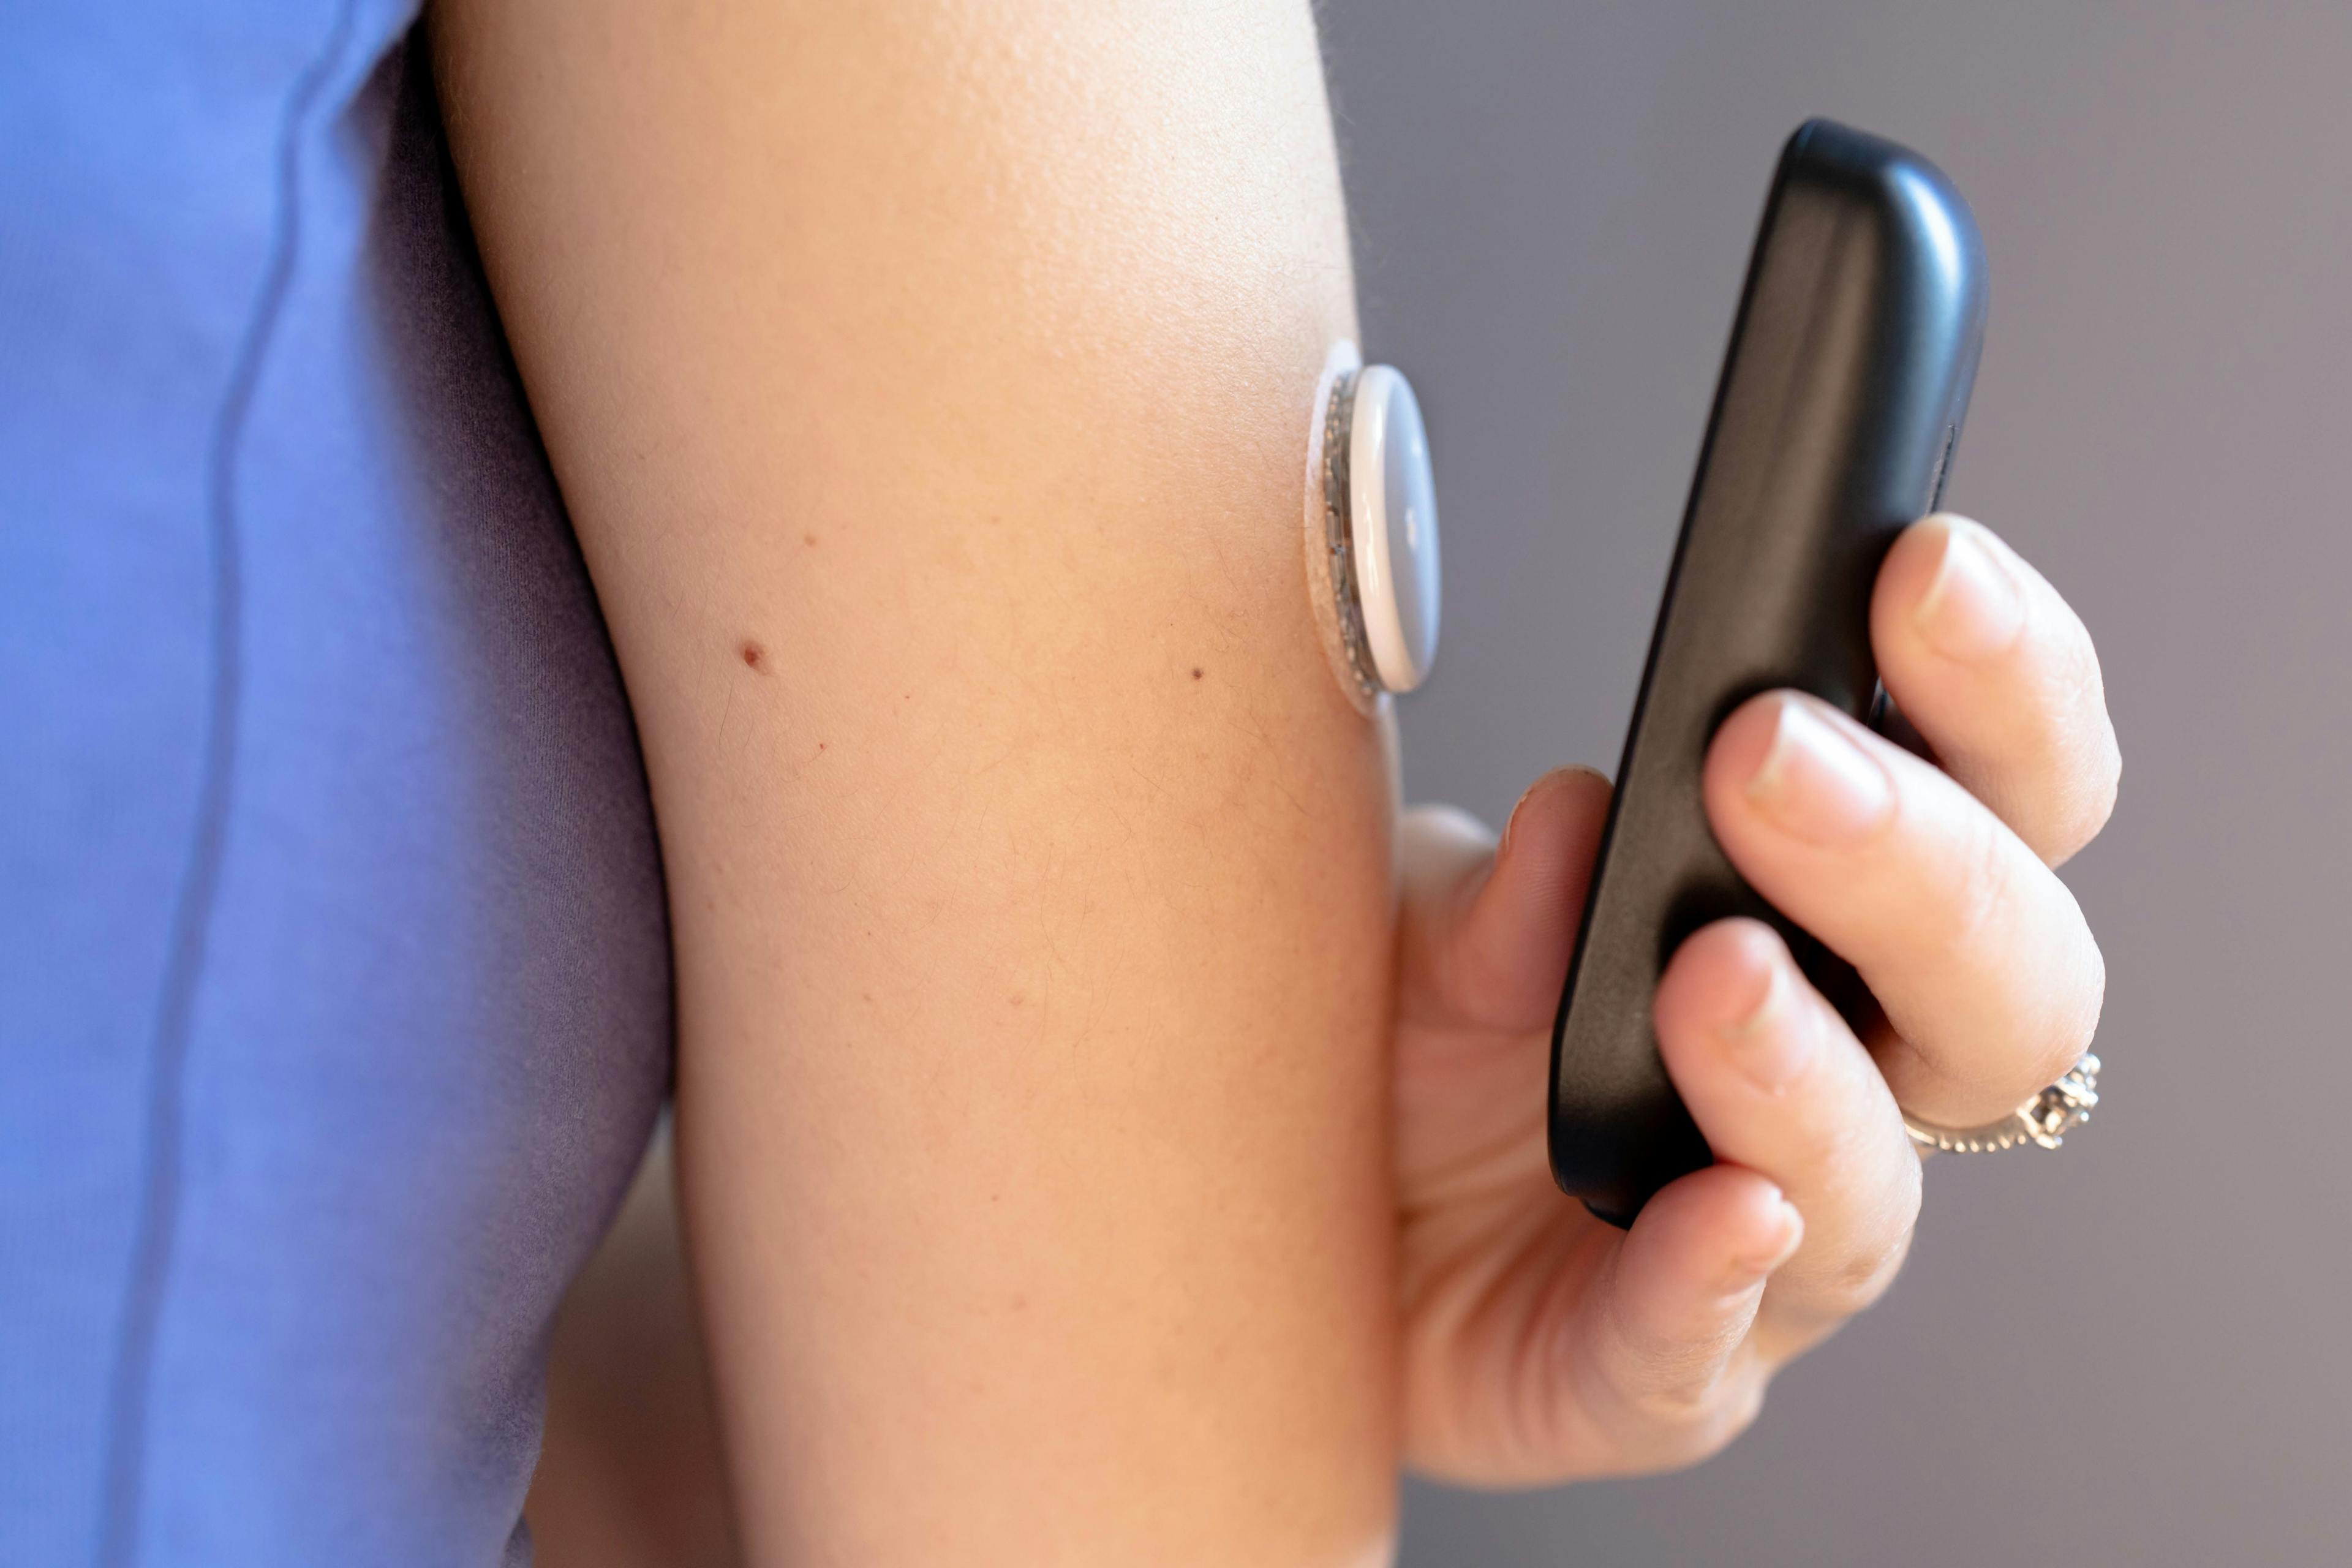 FDA Approves 2 New OTC Continuous Glucose Monitors 